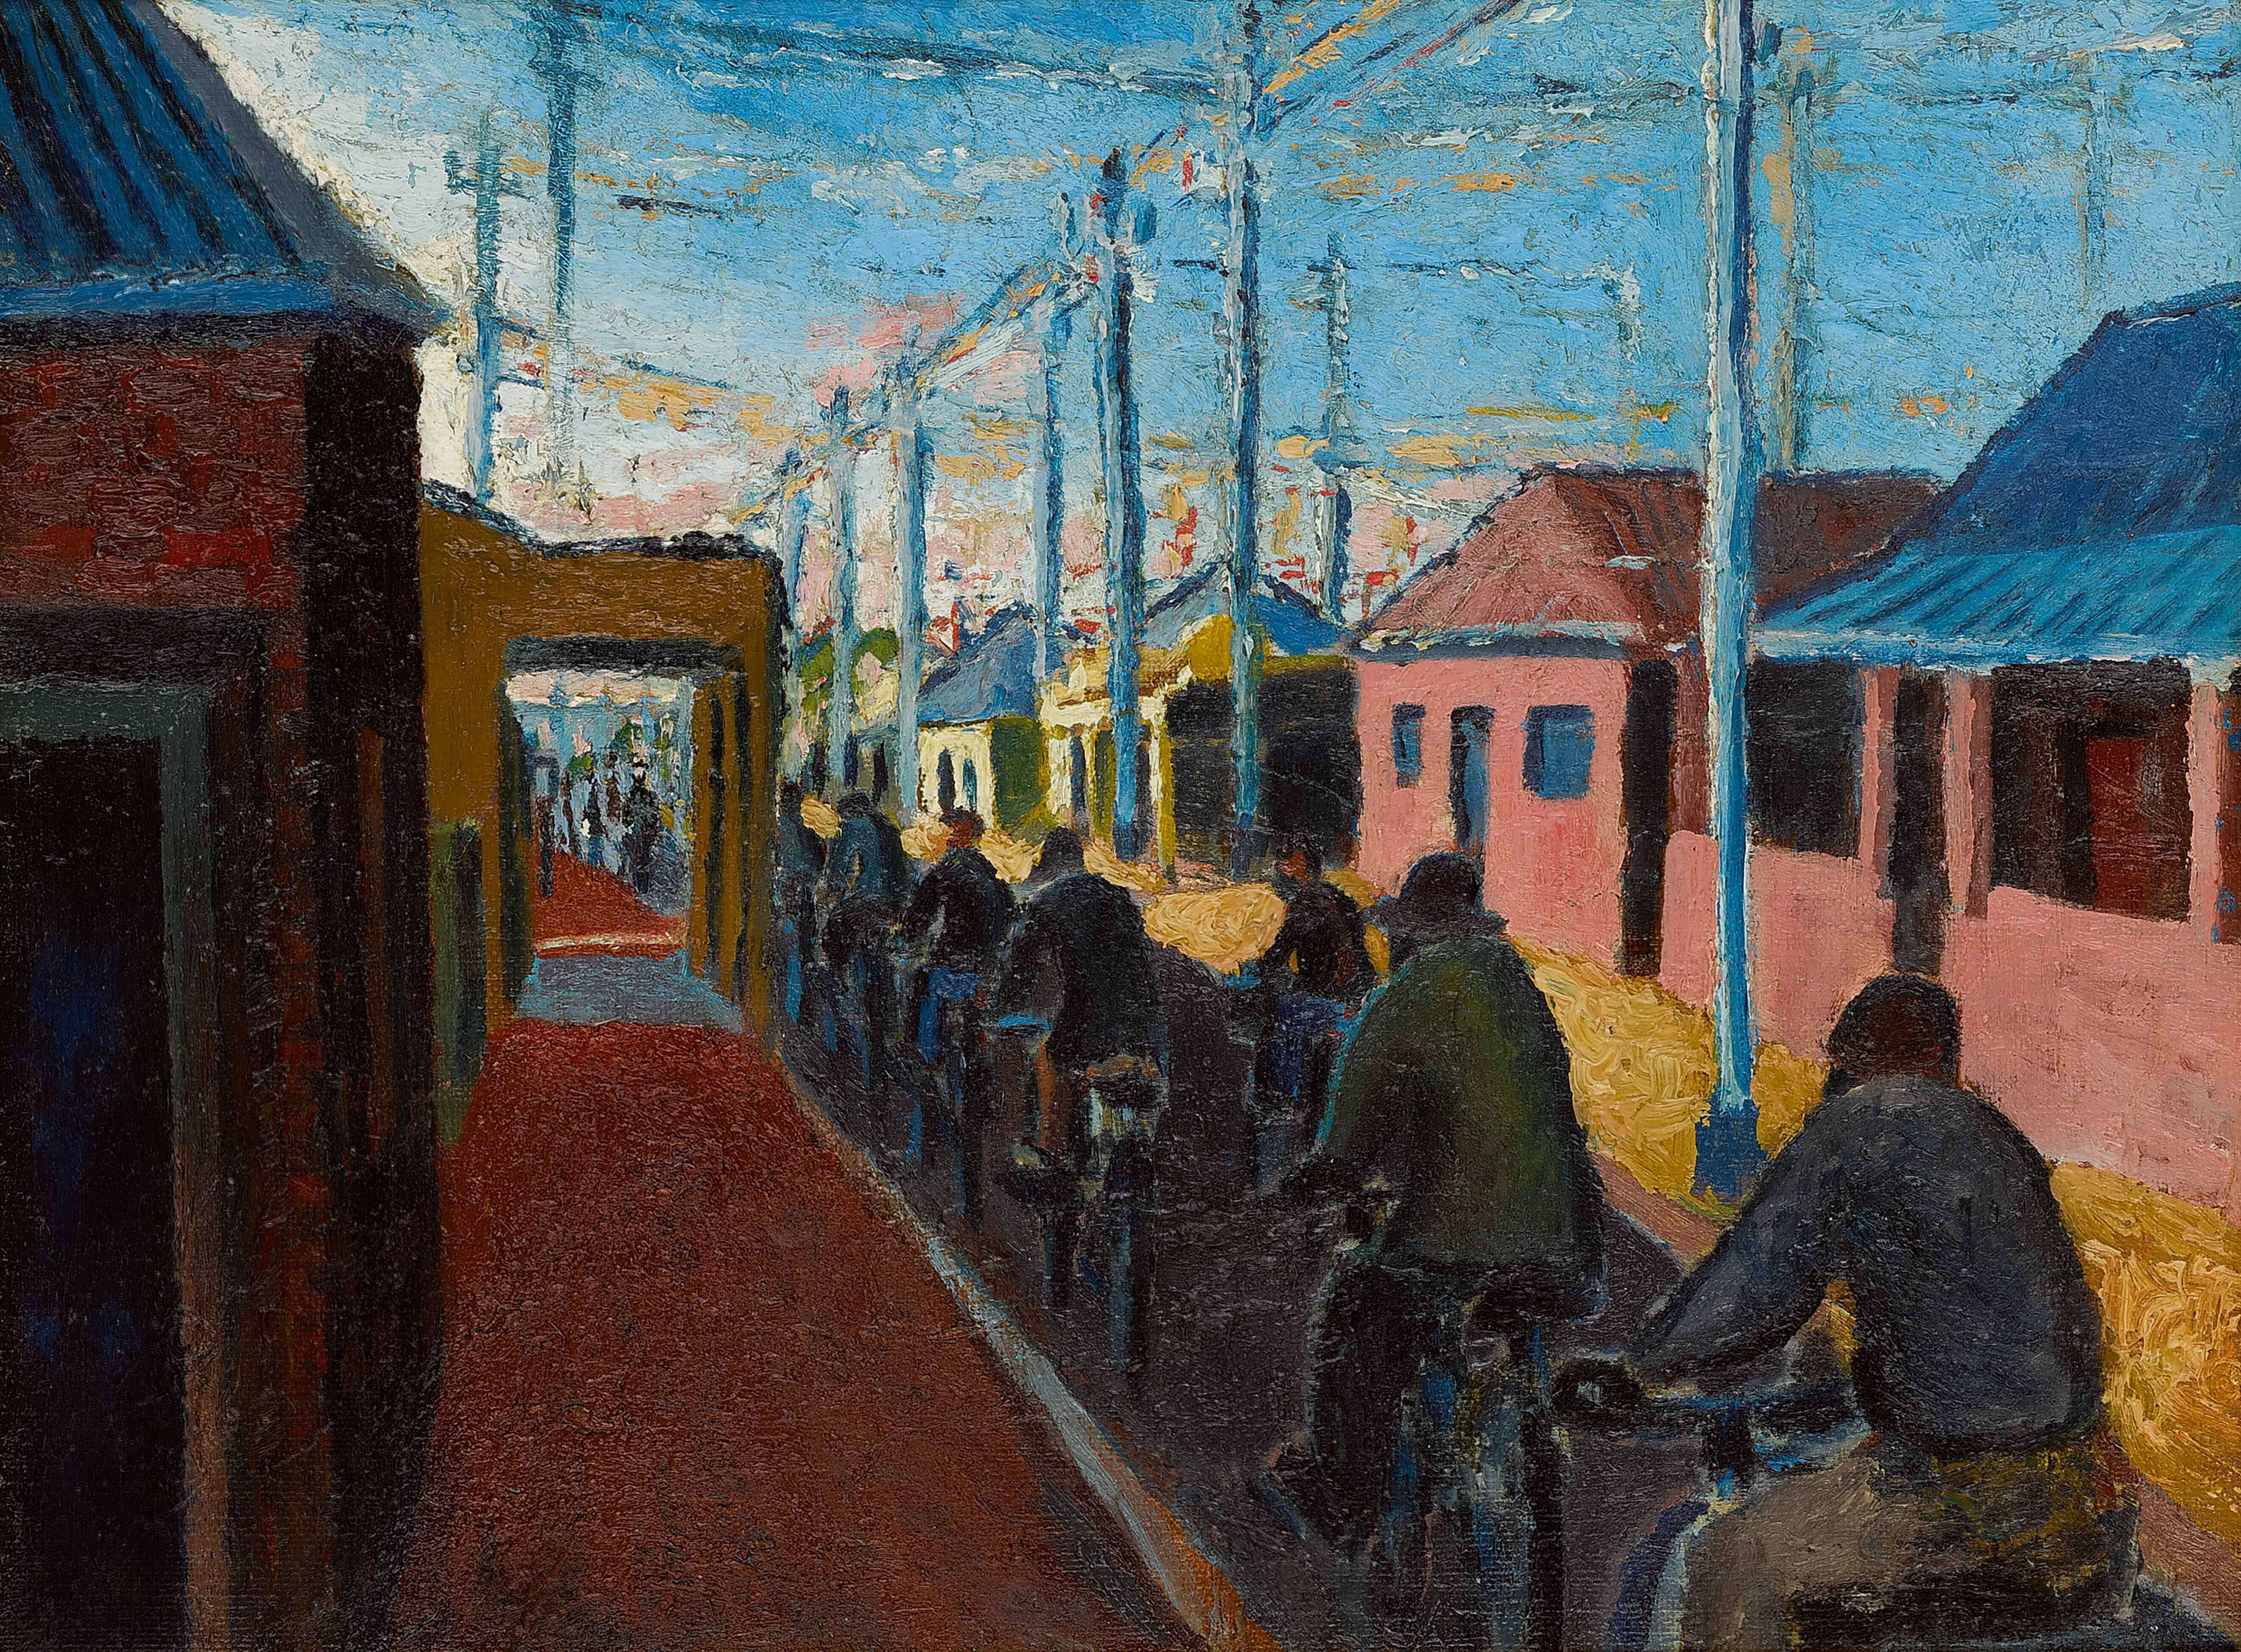 Gerard Sekoto, Cyclists in Sophiatown, 1940.